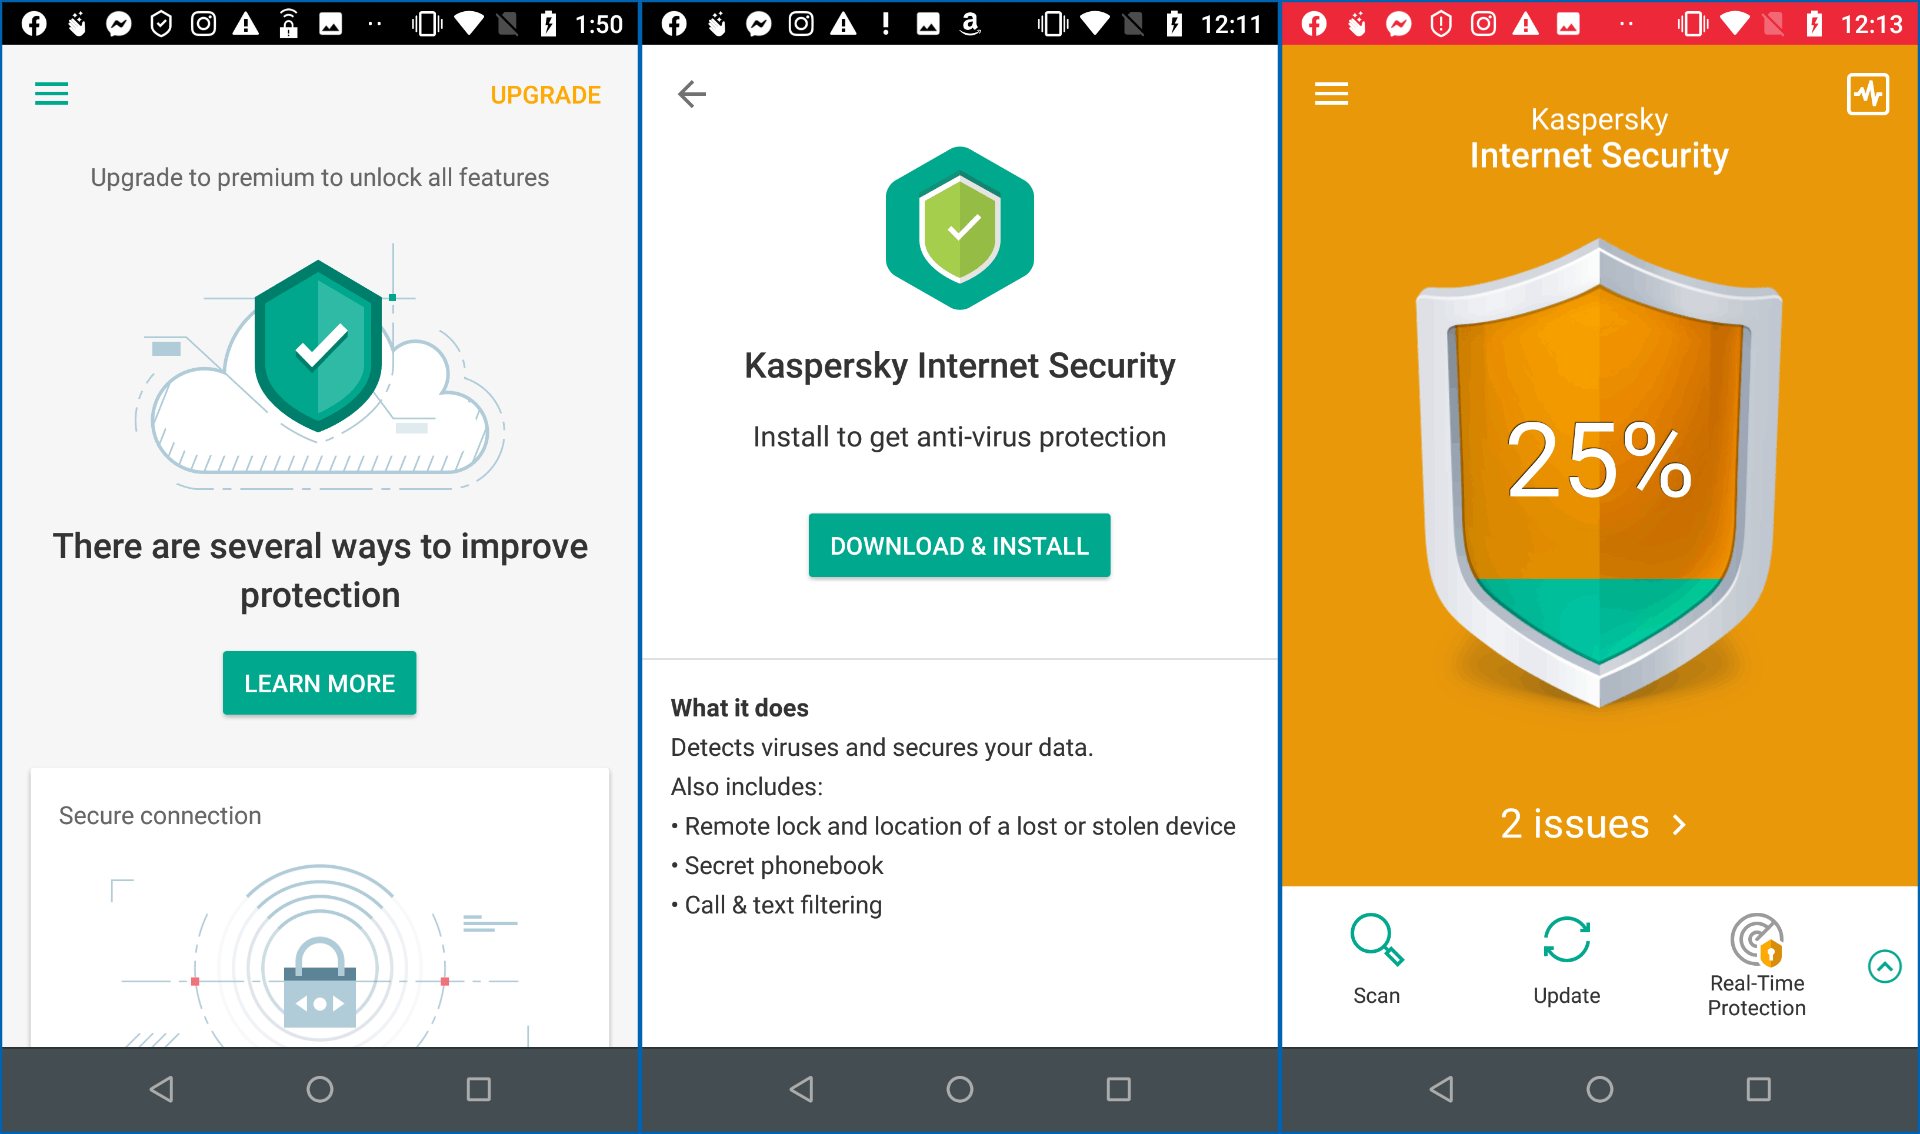 Kaspersky App - Protect Phones with this AntiVirus App